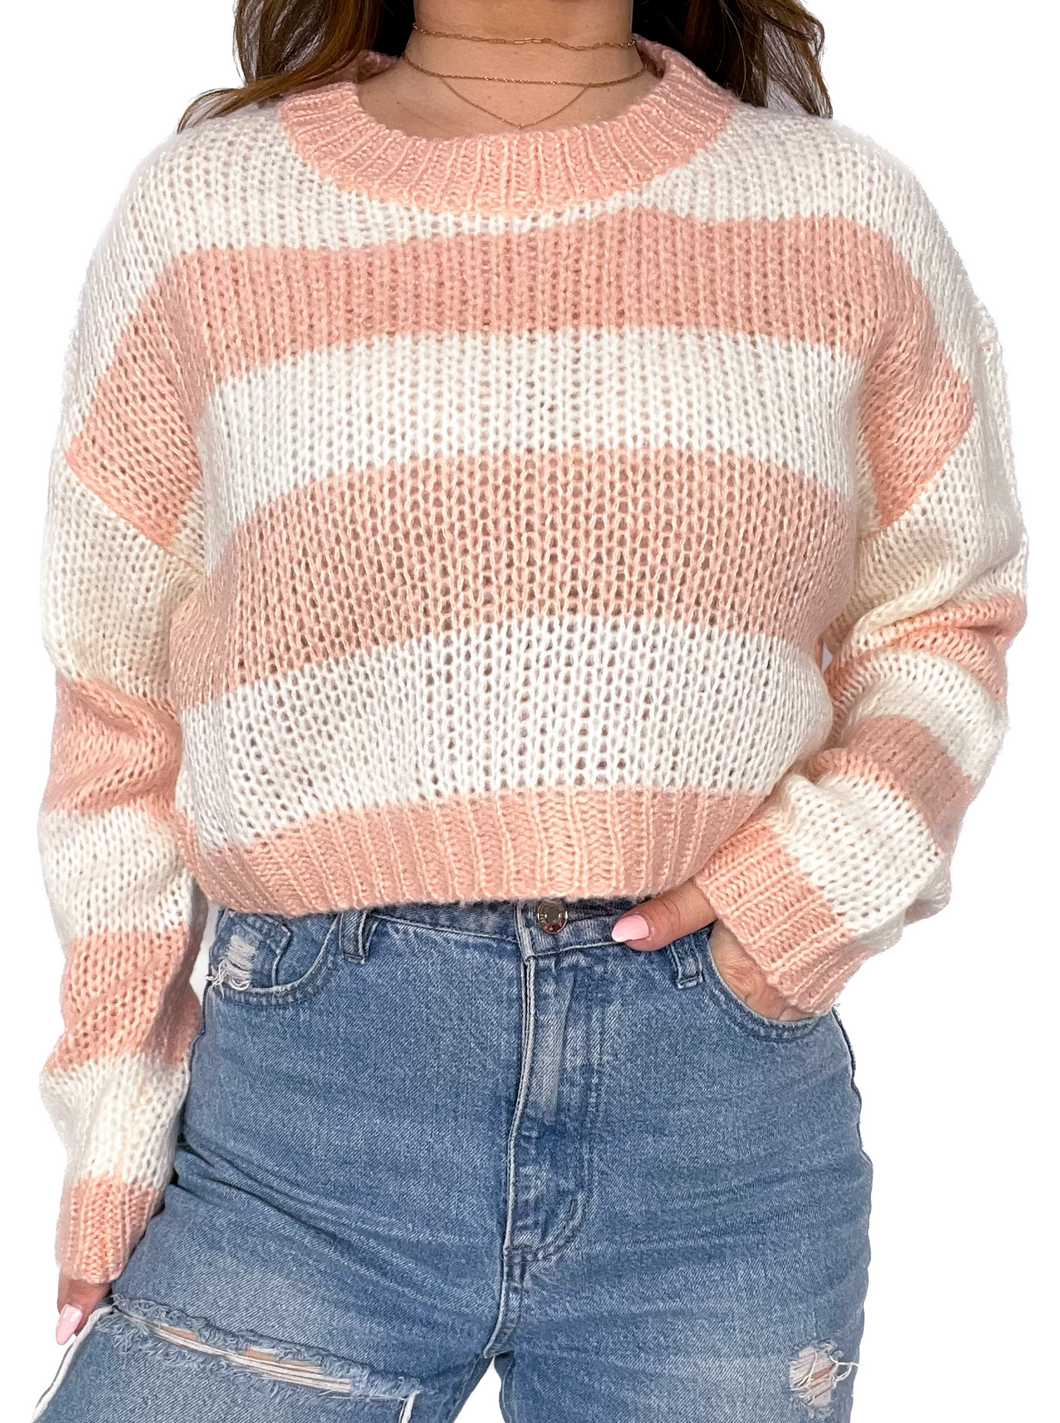 Spring Fling Sweater